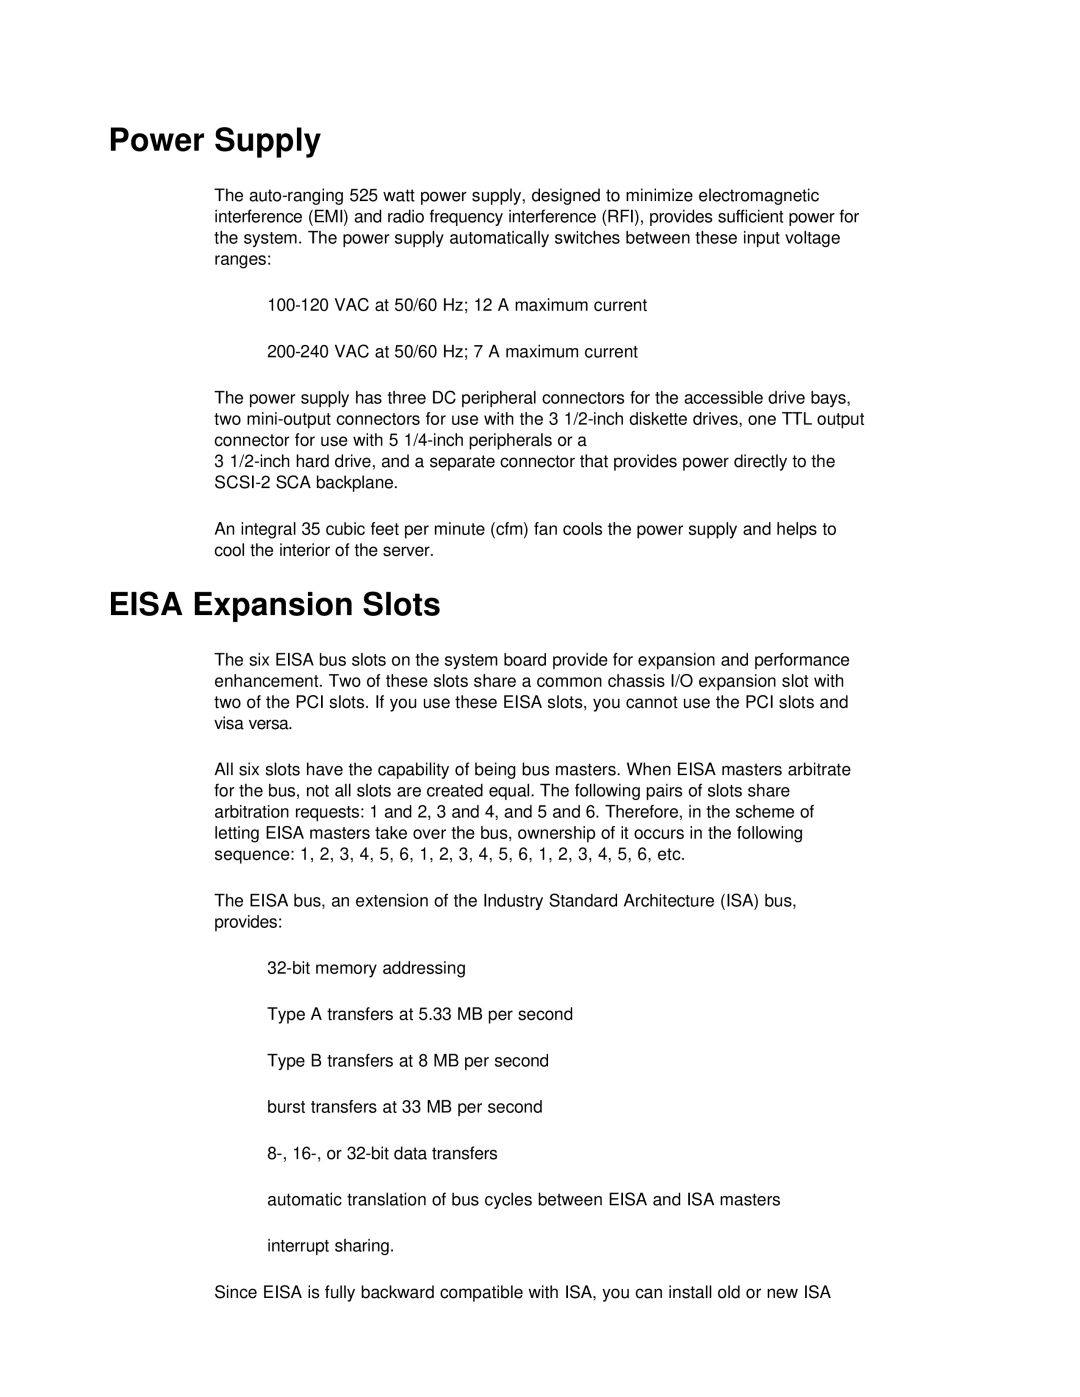 NEC PH133 manual Power Supply, EISA Expansion Slots 